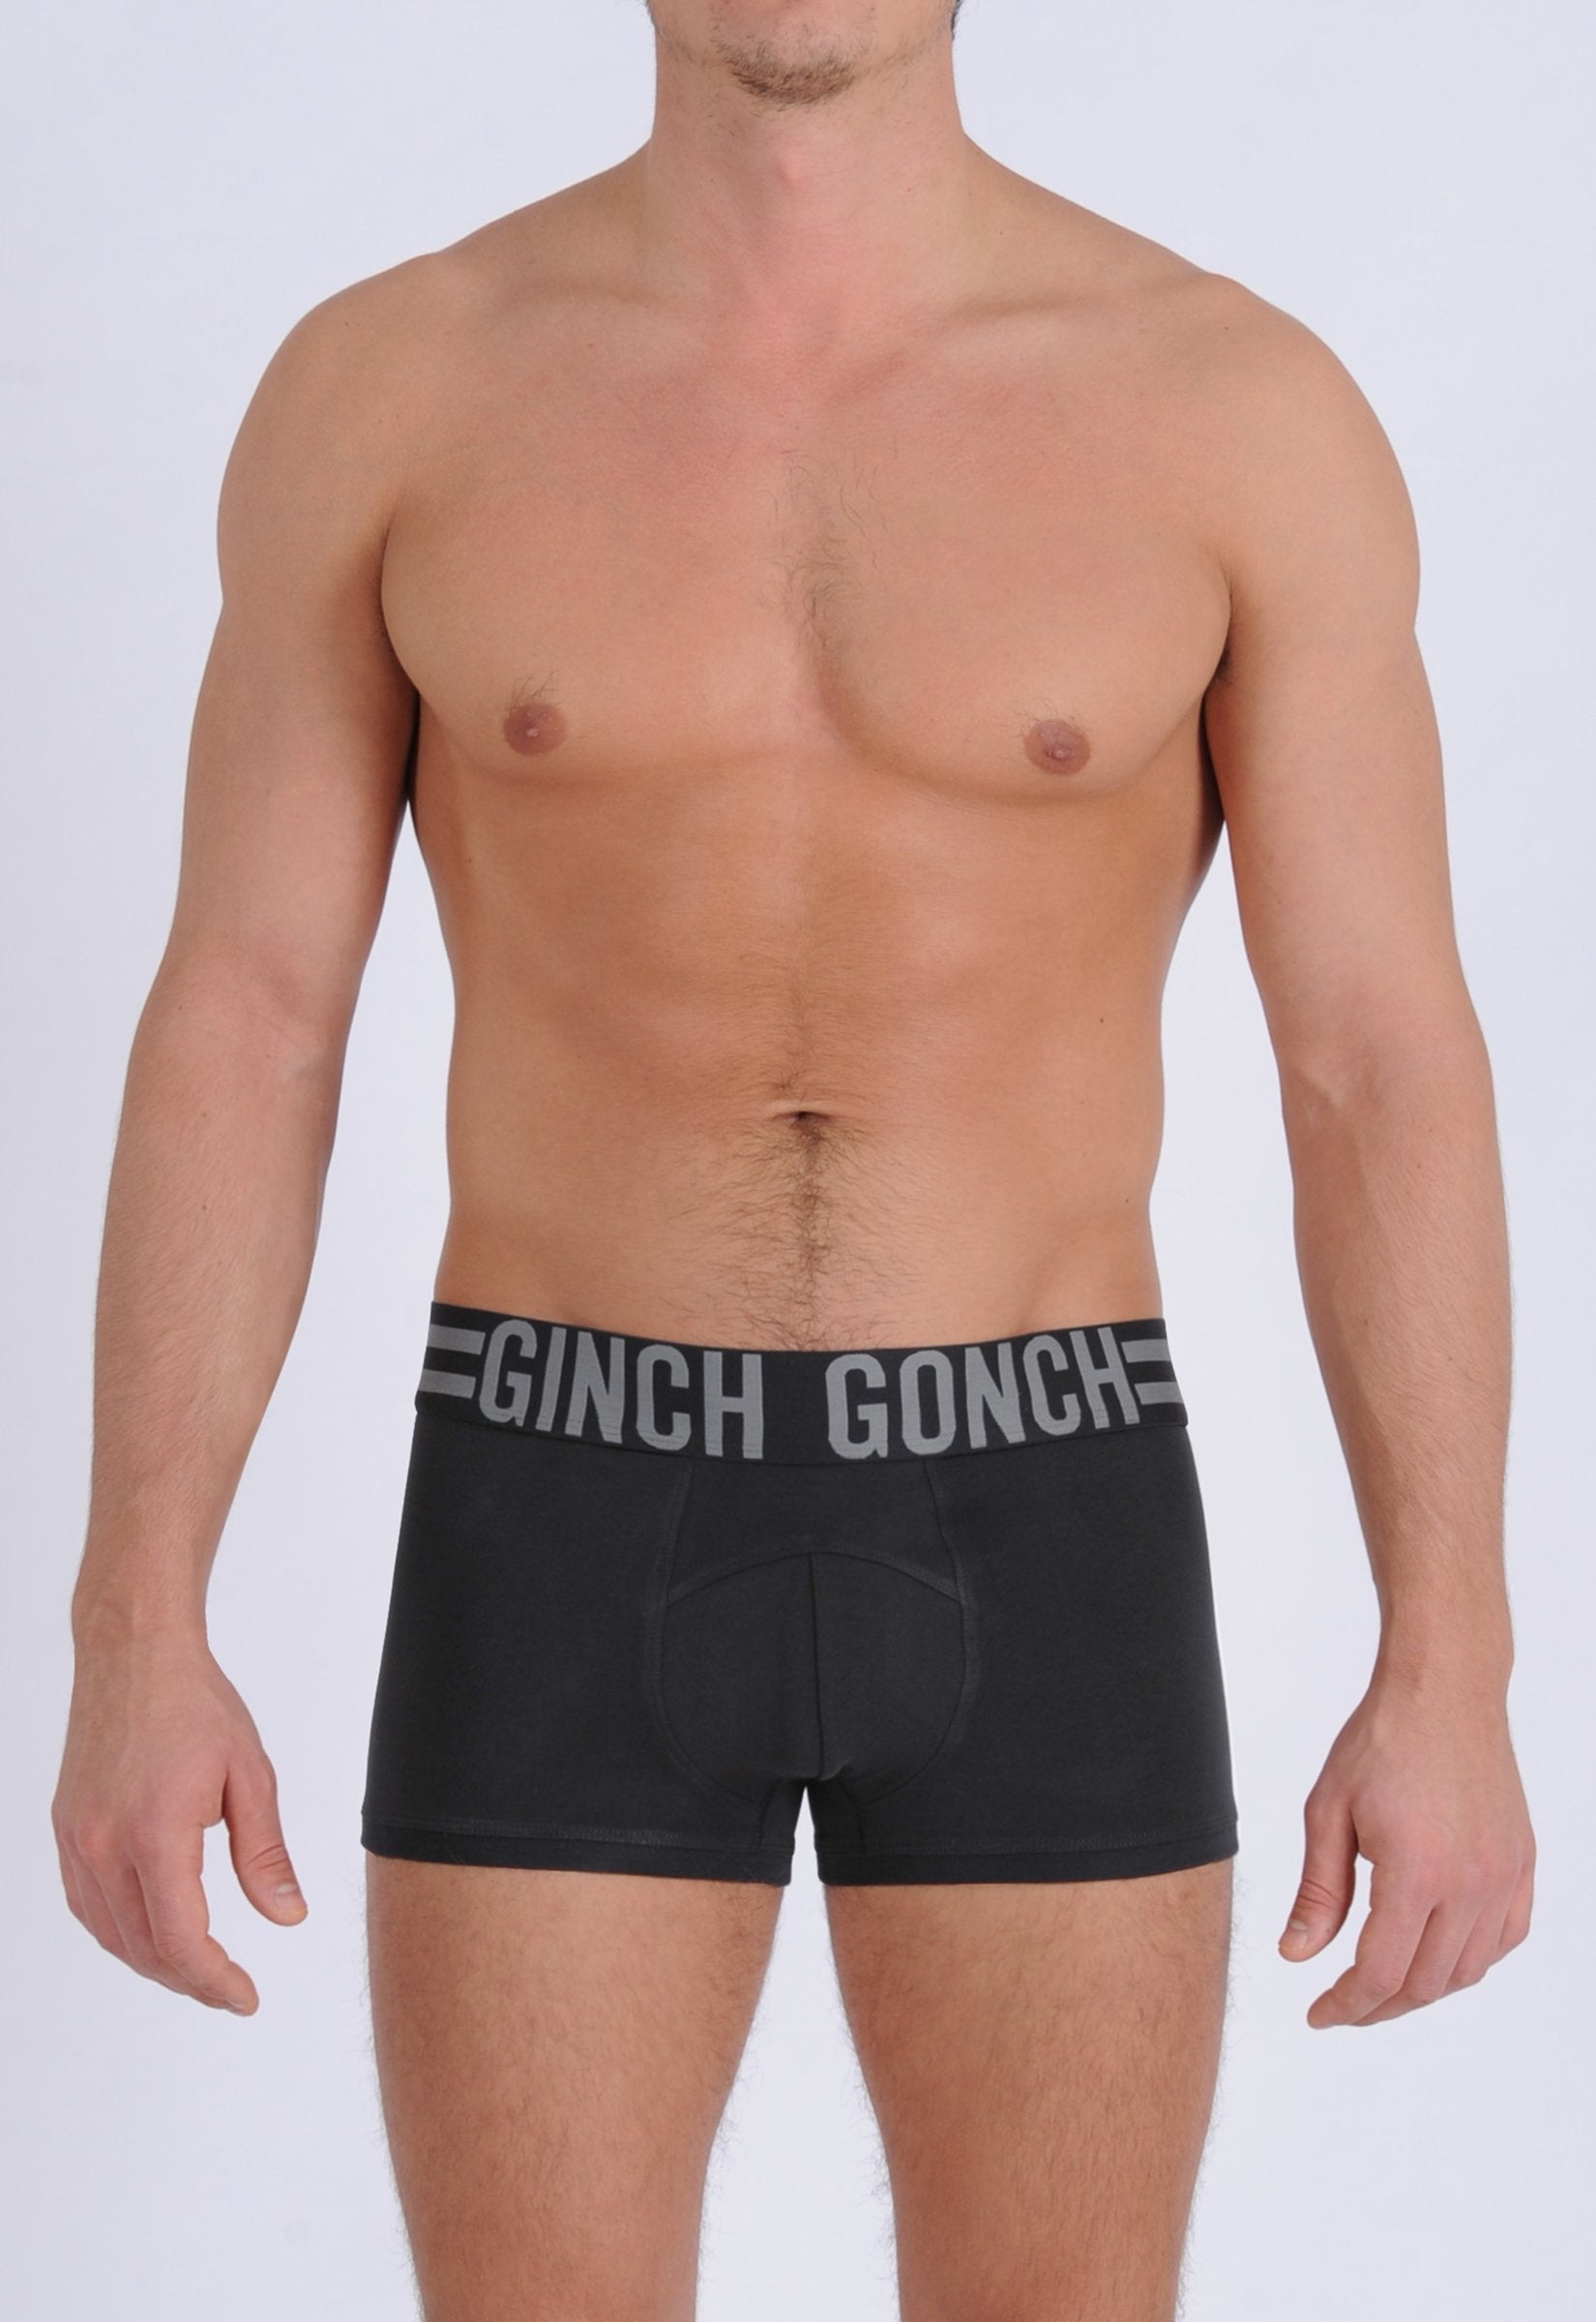 Ginch Gonch Signature Series - Trunk, short boxer brief - Black men's underwear thick printed waistband front